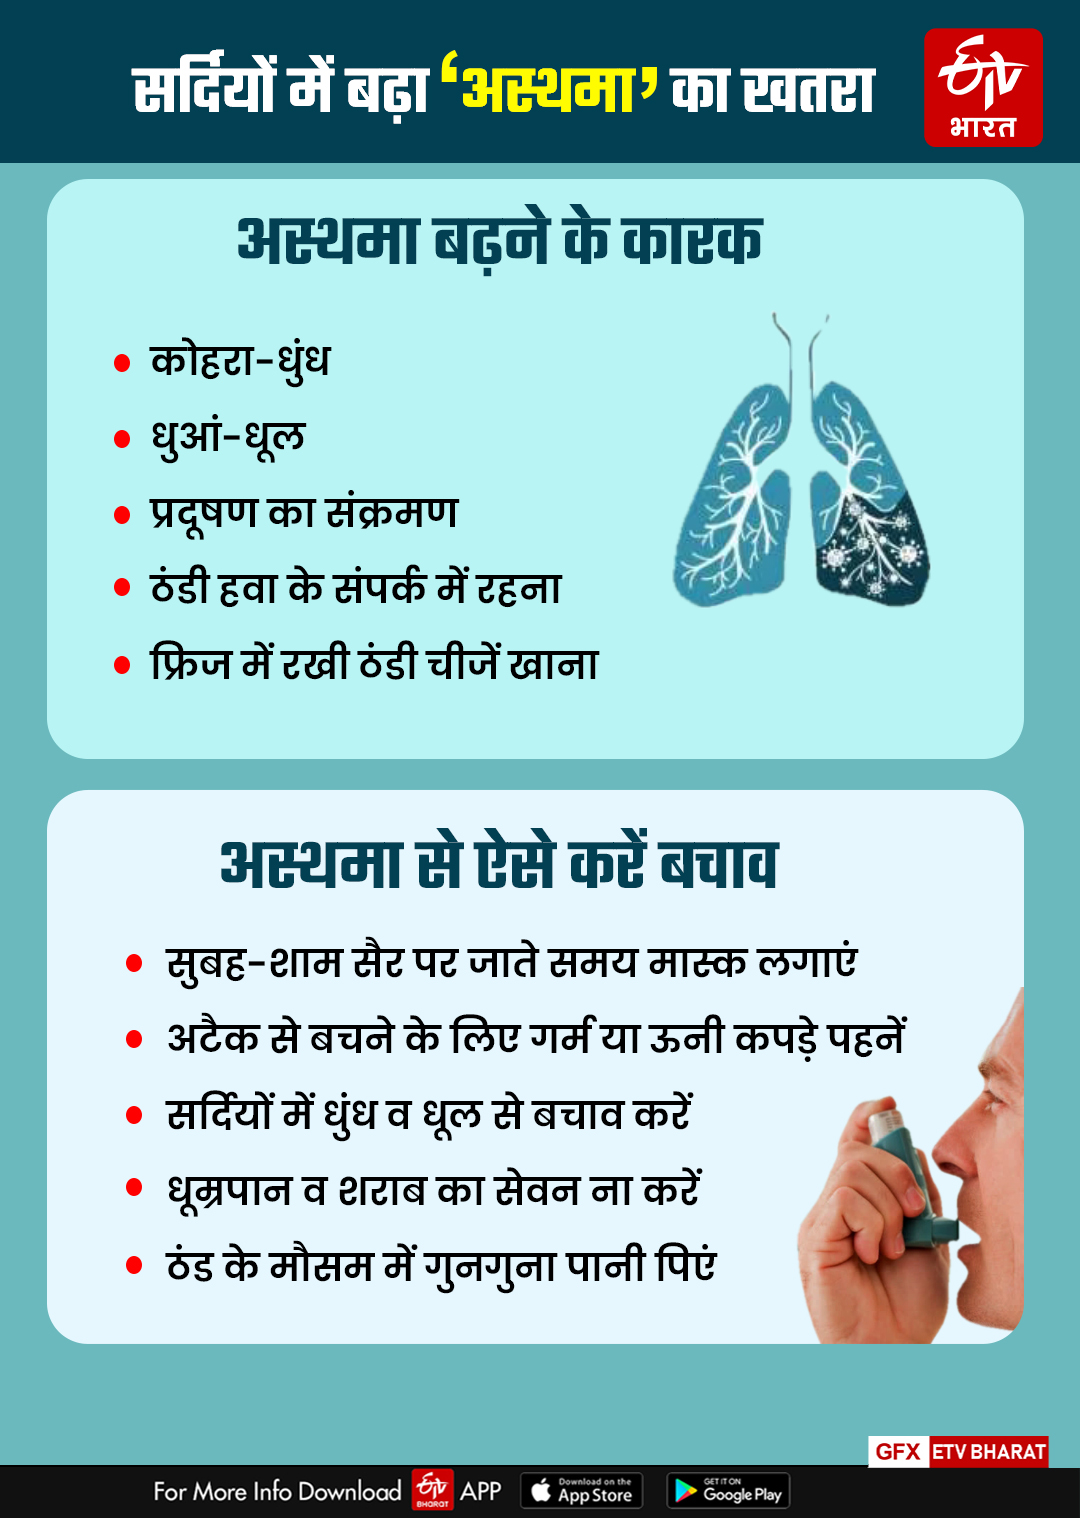 Asthma Home Remedies